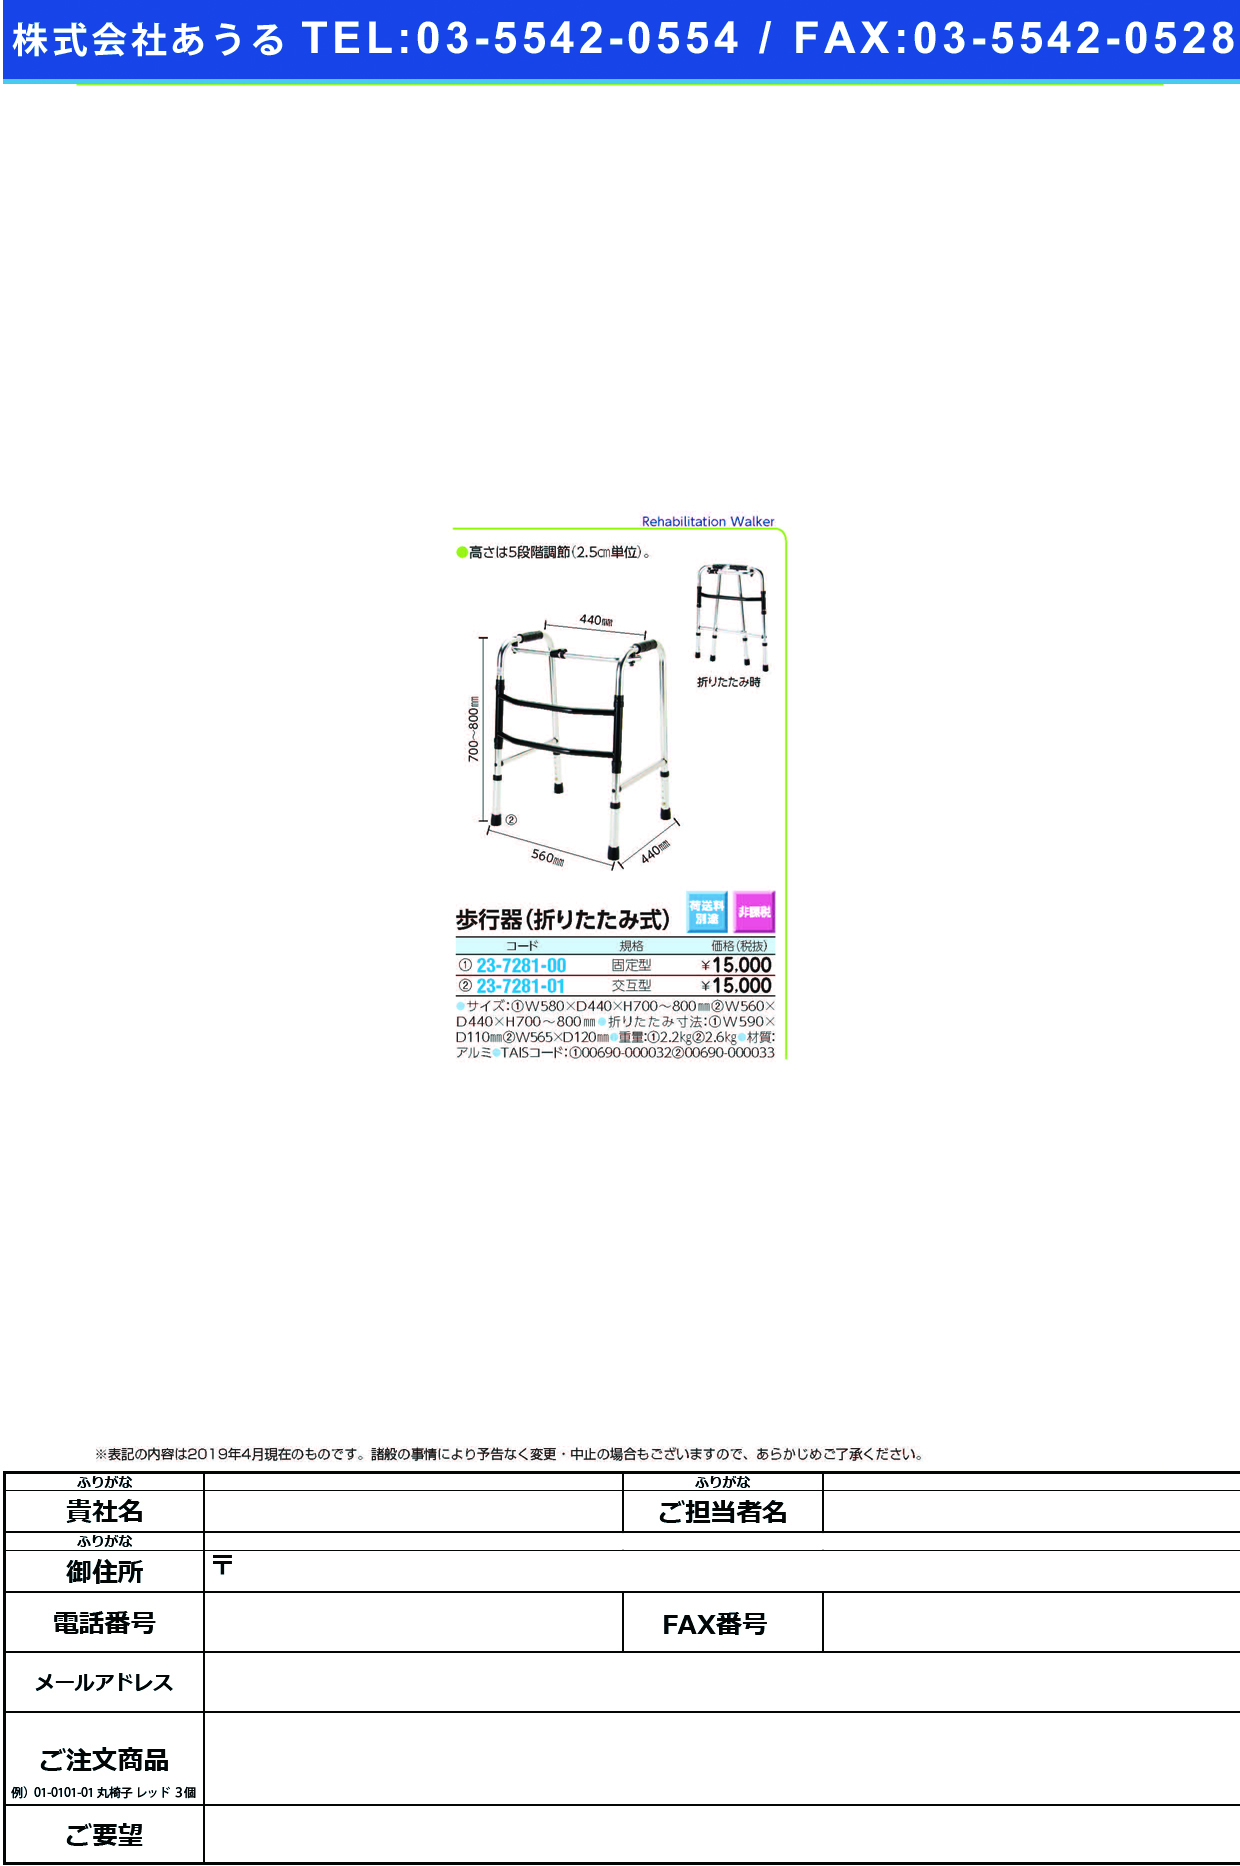 (23-7281-00)歩行器（折りたたみ式）固定型 HK-100 ﾎｺｳｷ(ｵﾘﾀﾀﾐｼｷ)ｺﾃｲｶﾞﾀ【1台単位】【2019年カタログ商品】